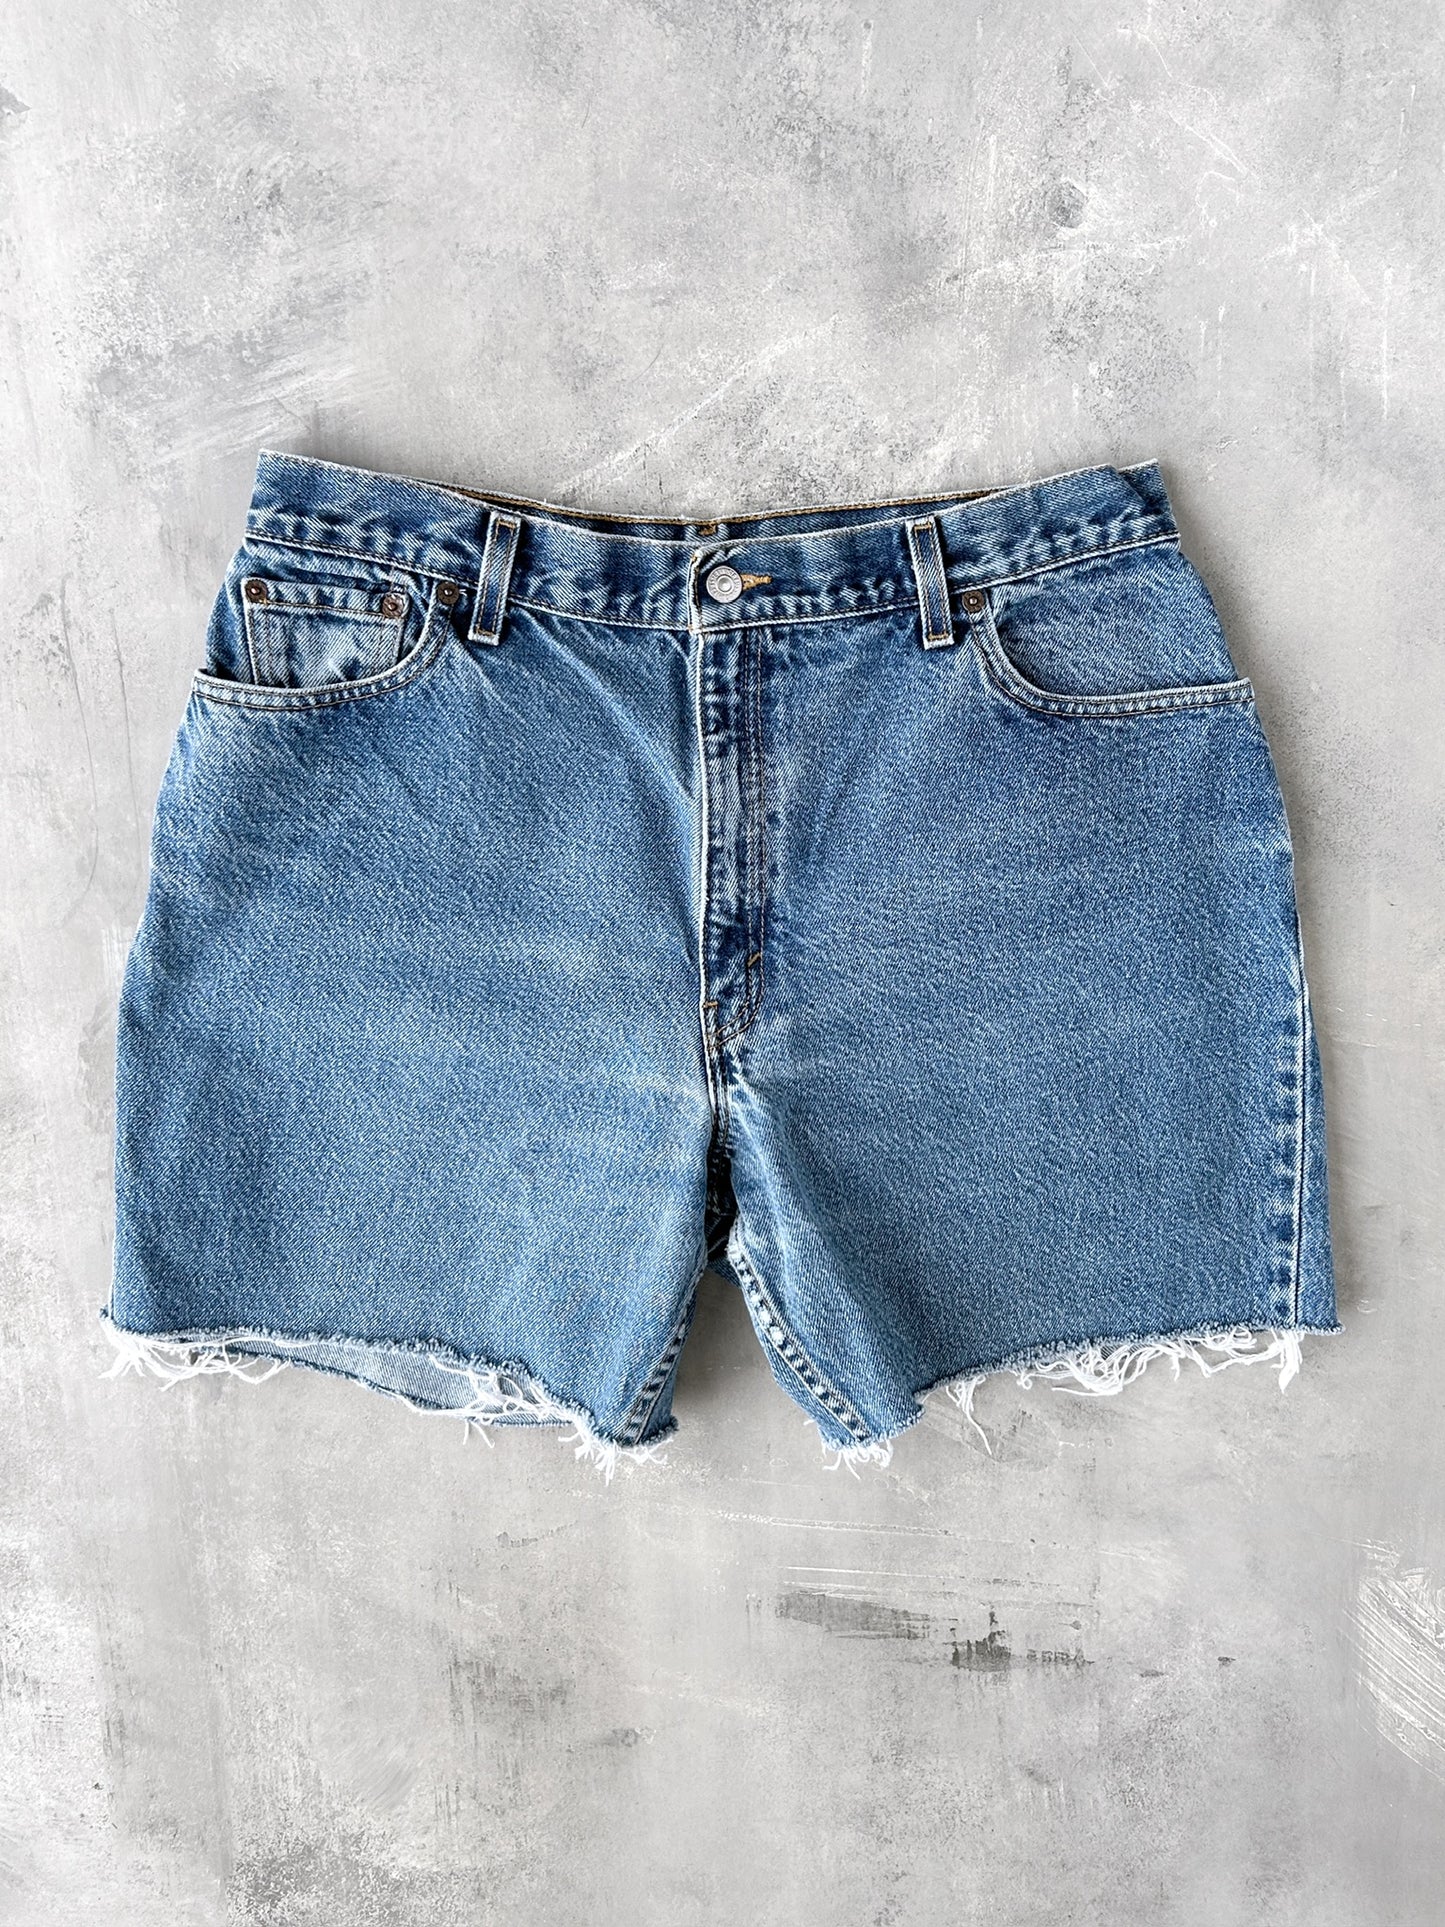 Levi's 550 Jean Shorts '02 - Size 12-14